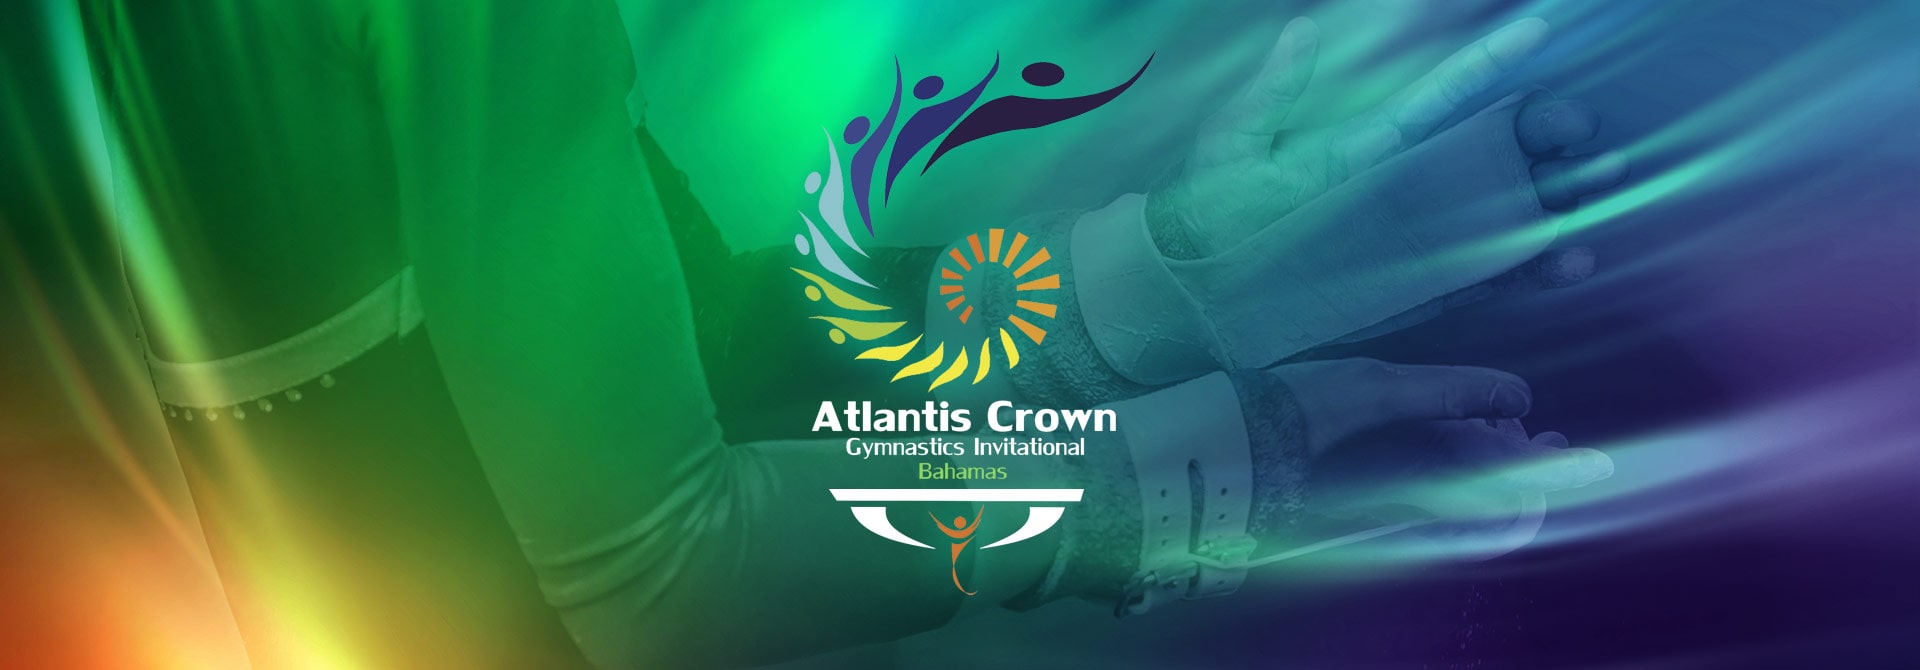 Atlantis Crown Gymnastics Invitational